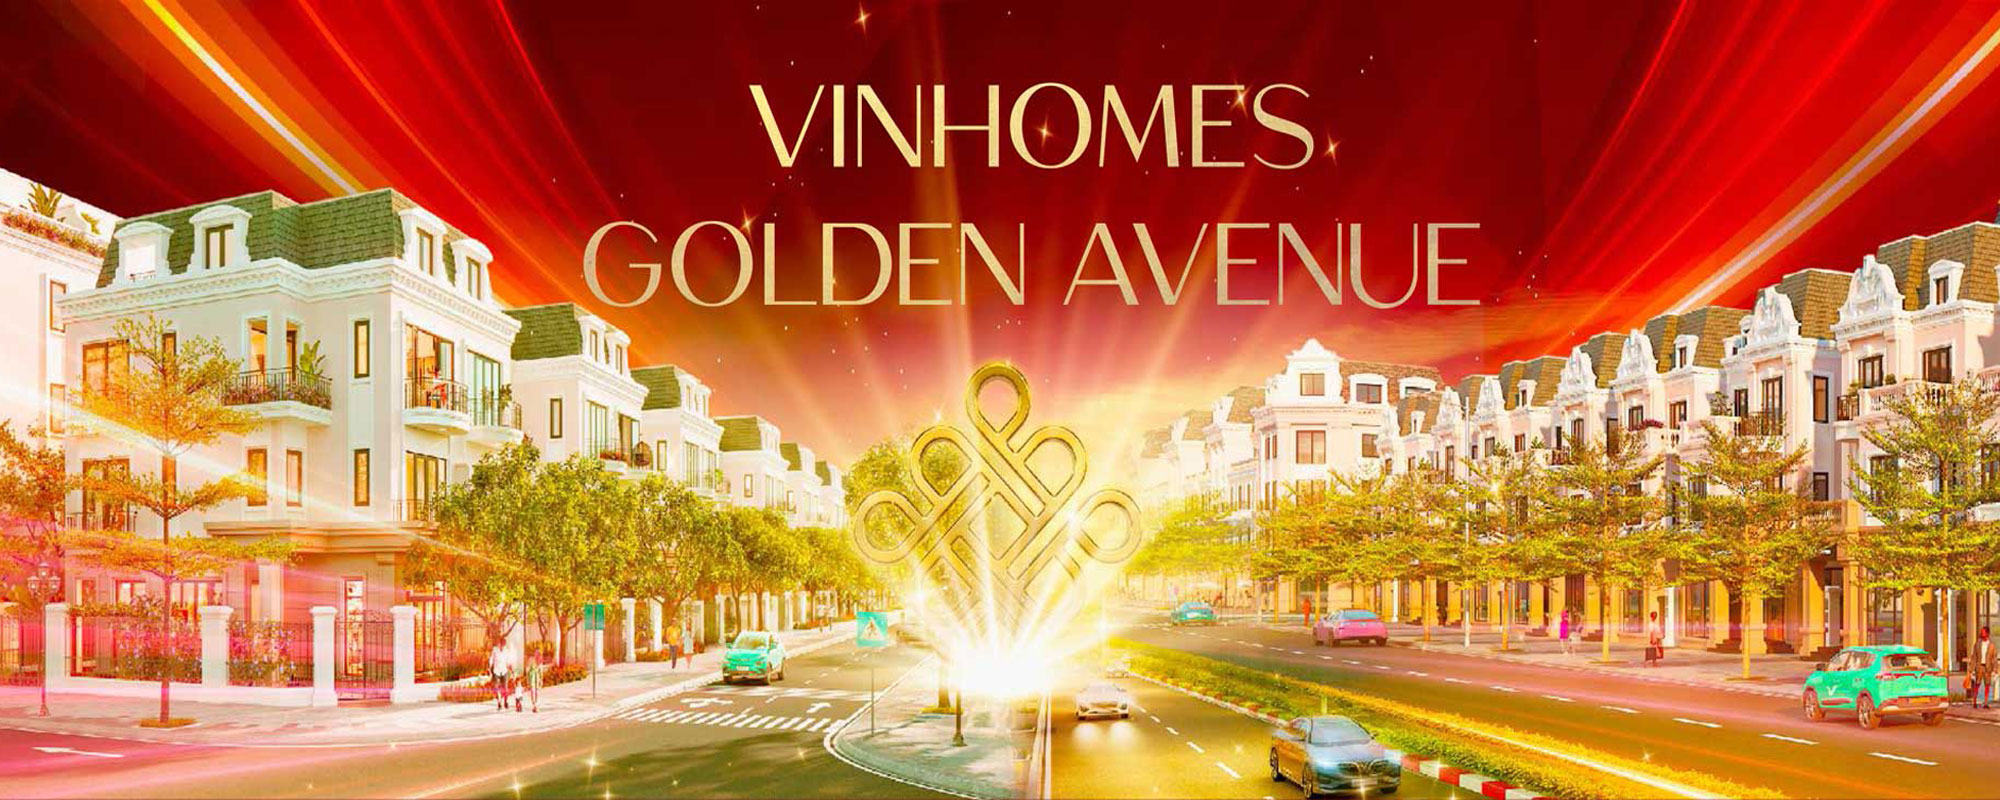 Vinhomes Golden Avenue - Homepage